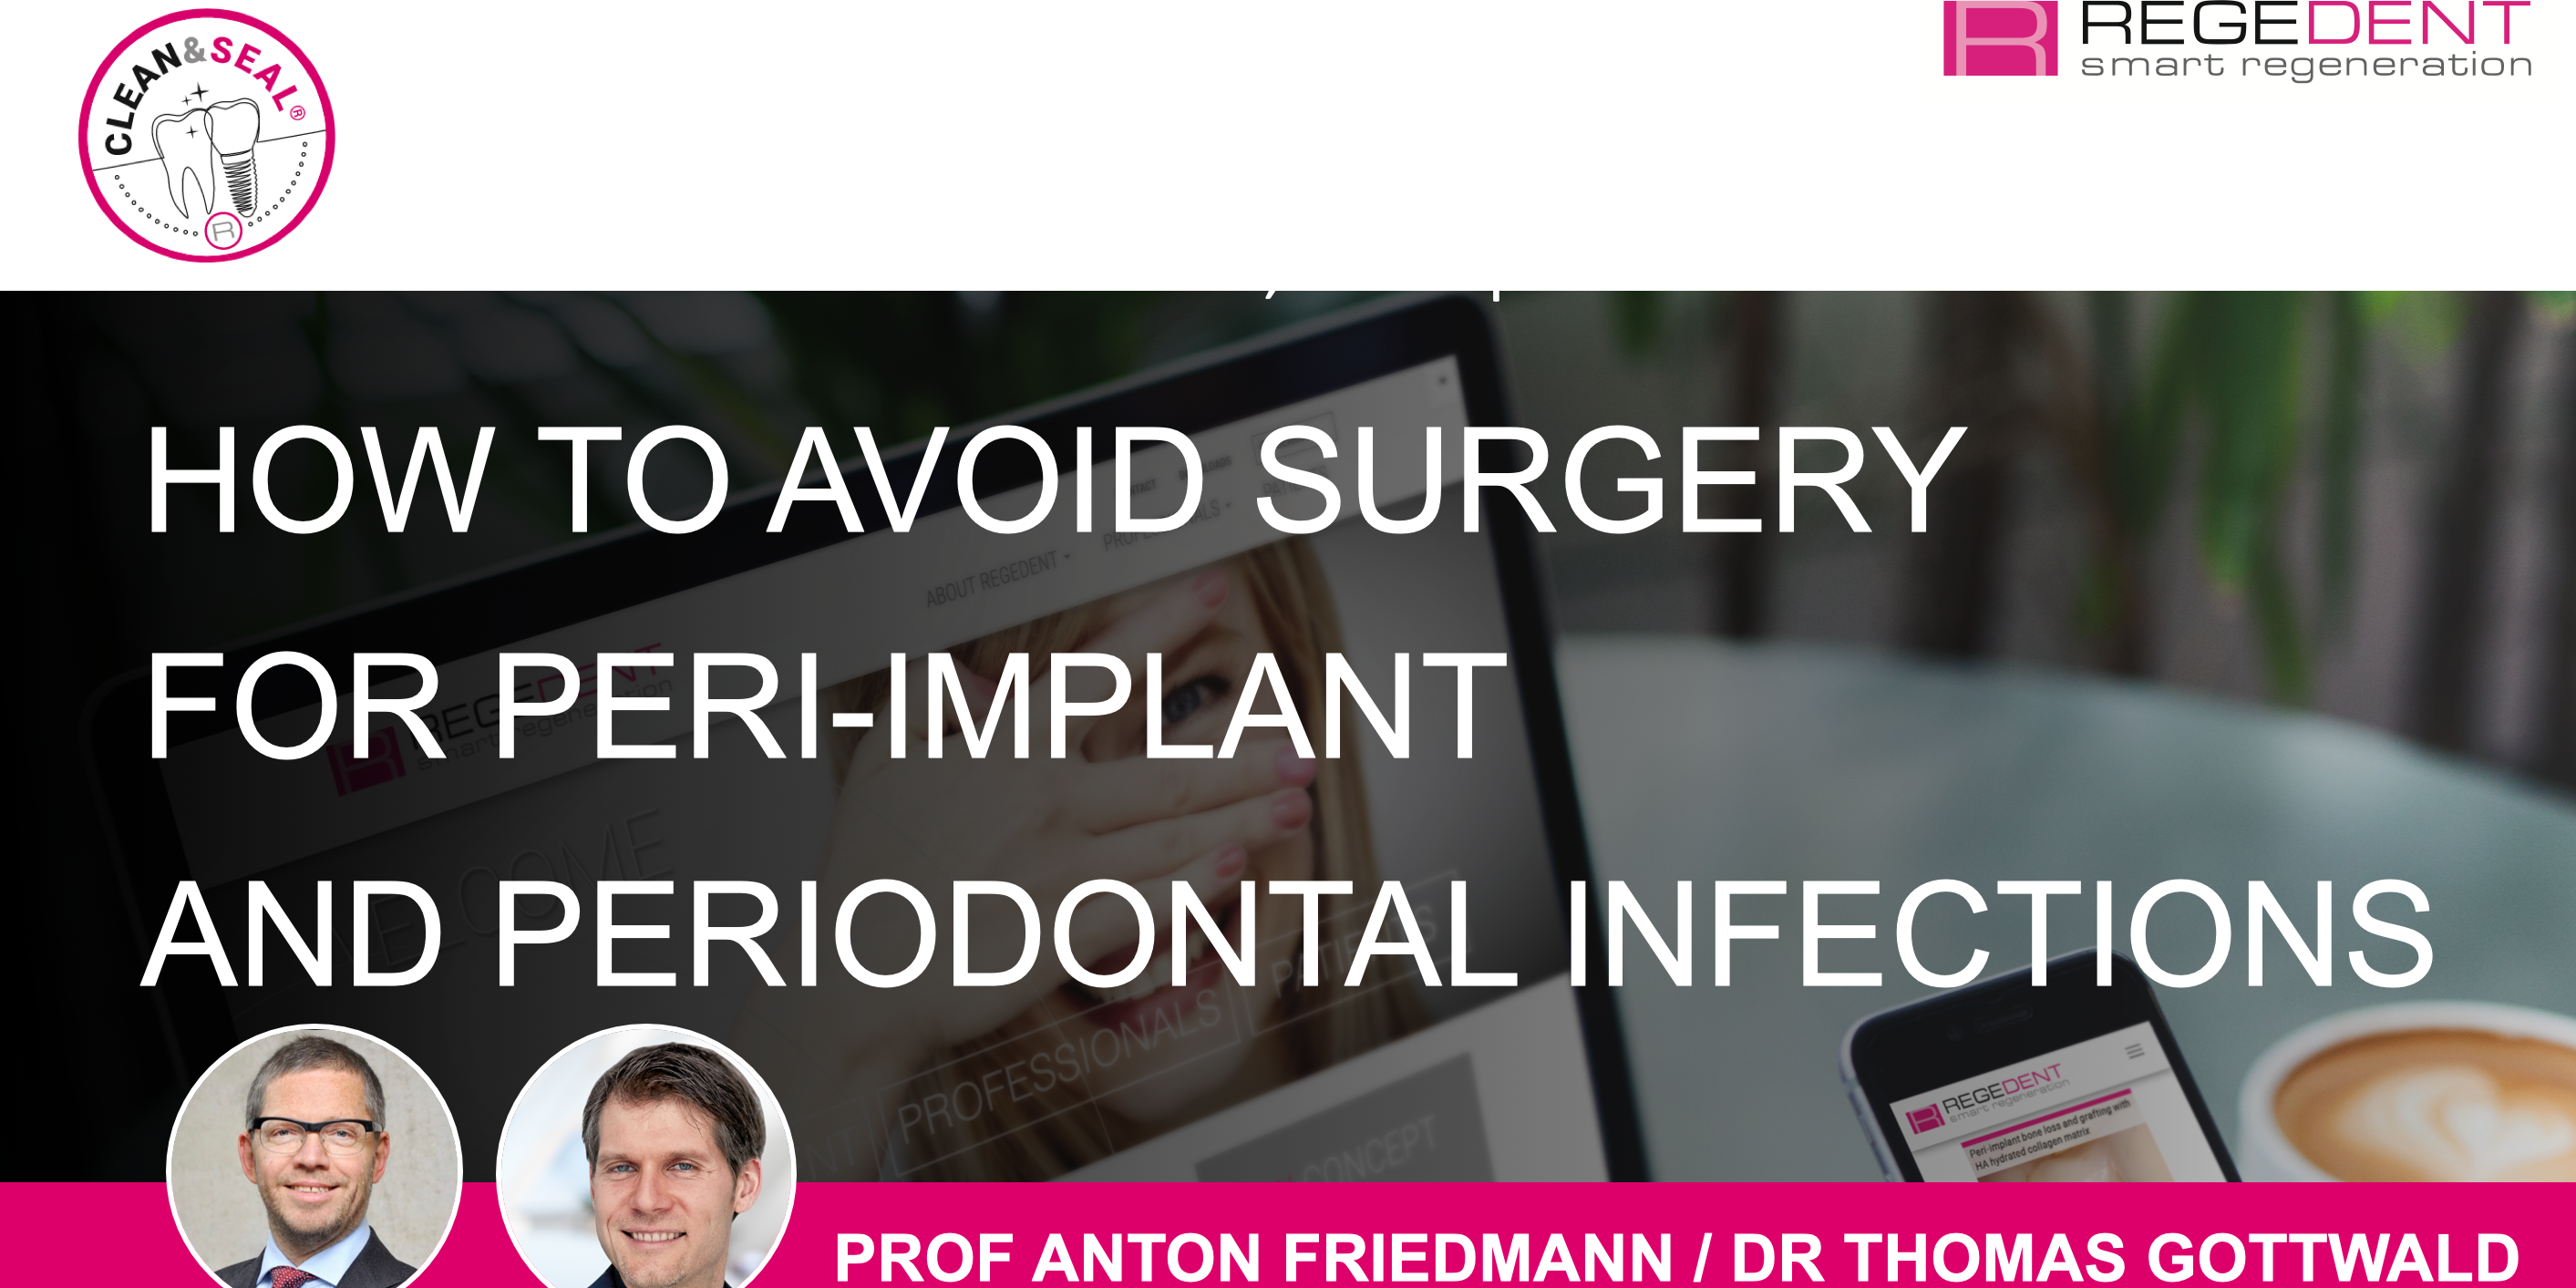 Video Chirurgie vermeiden Parodontitis Periimplantitis